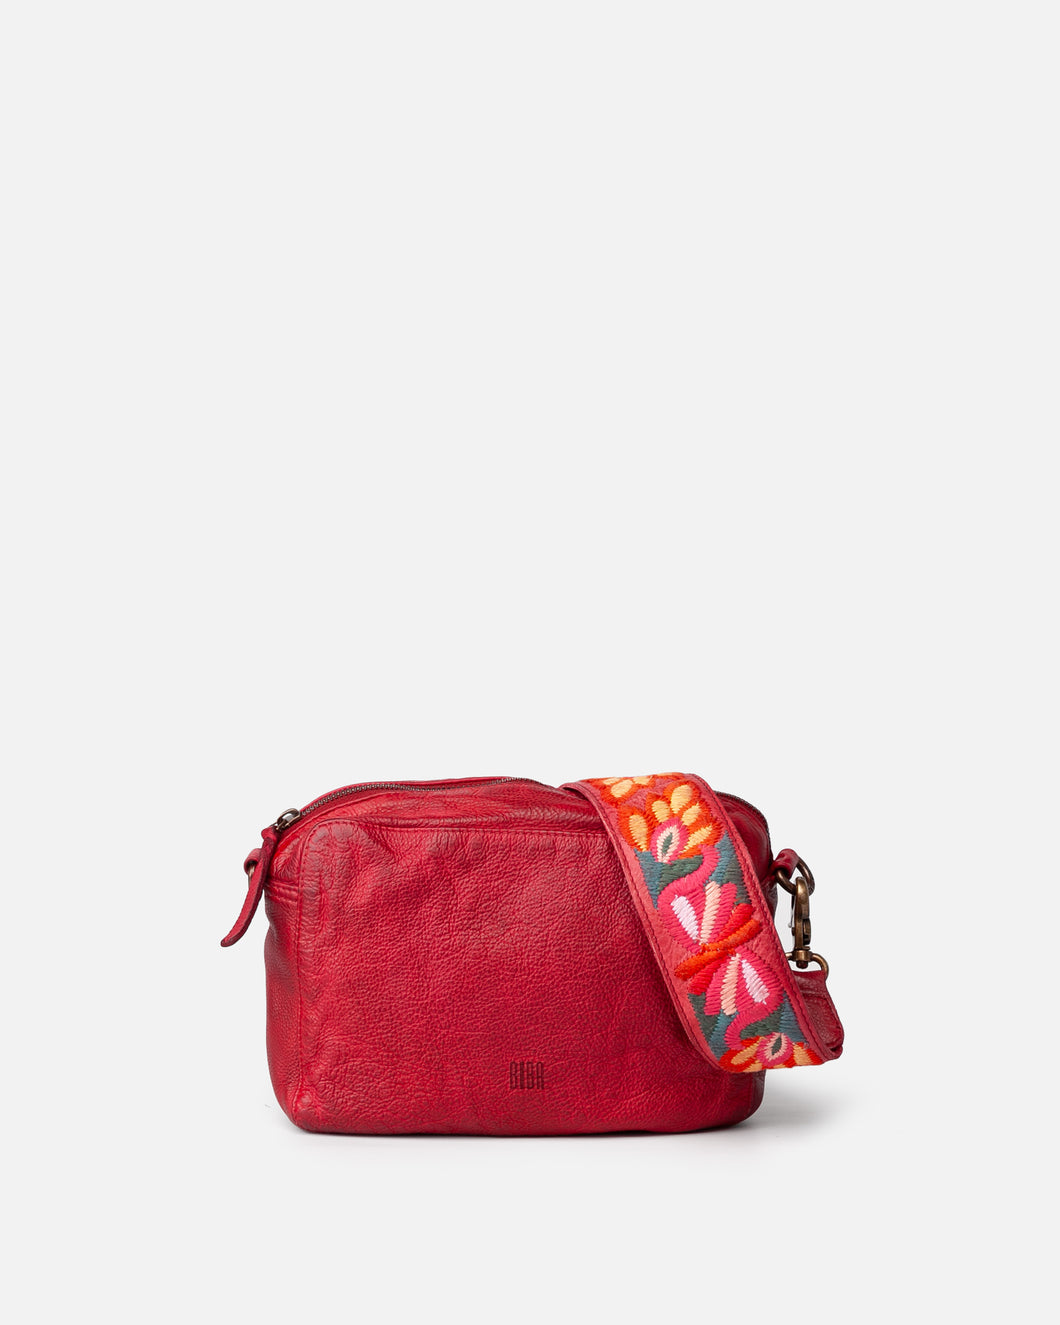 Biba Sumner embroidered strap handbag Red